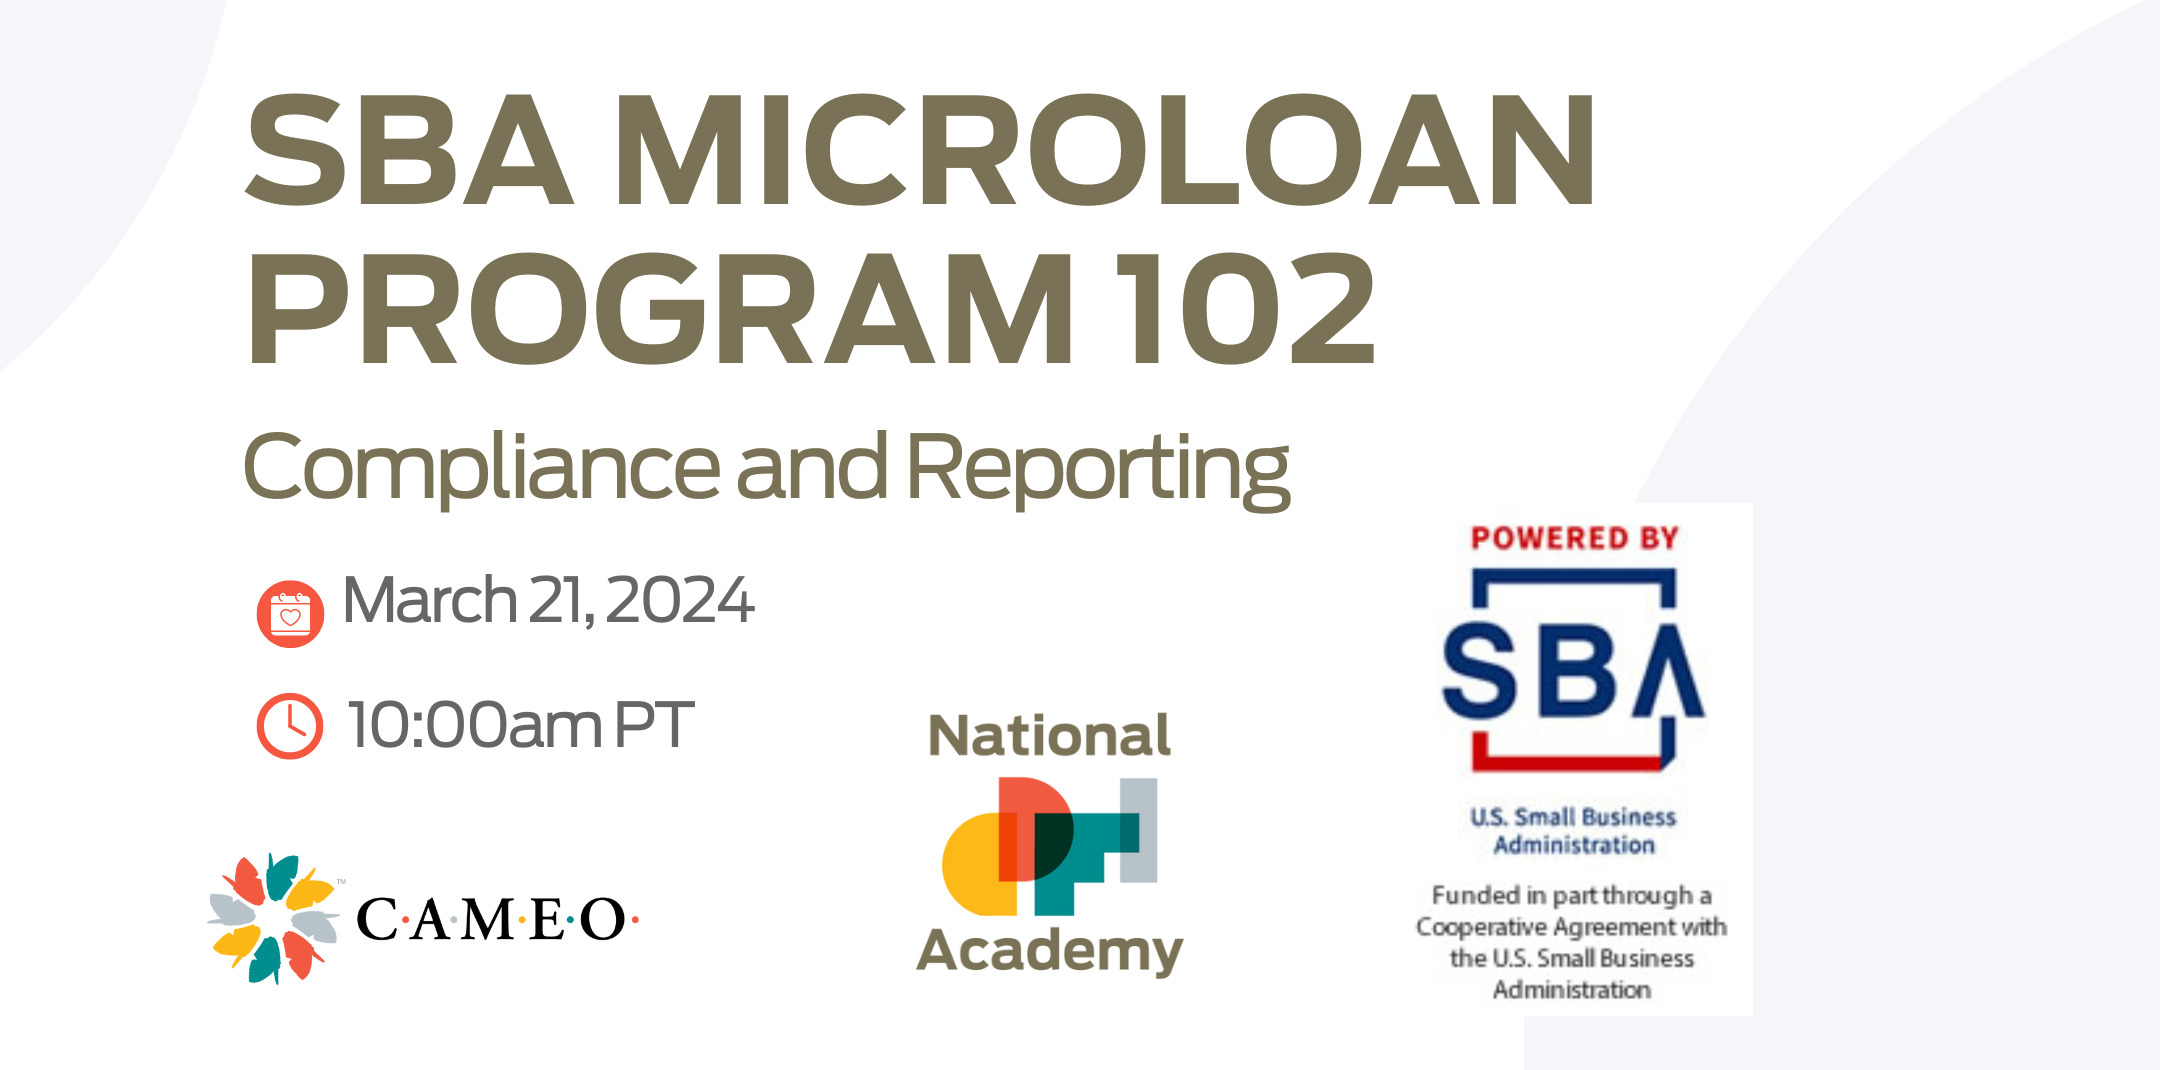 SBA Microloan Program: 102 Compliance and Reporting